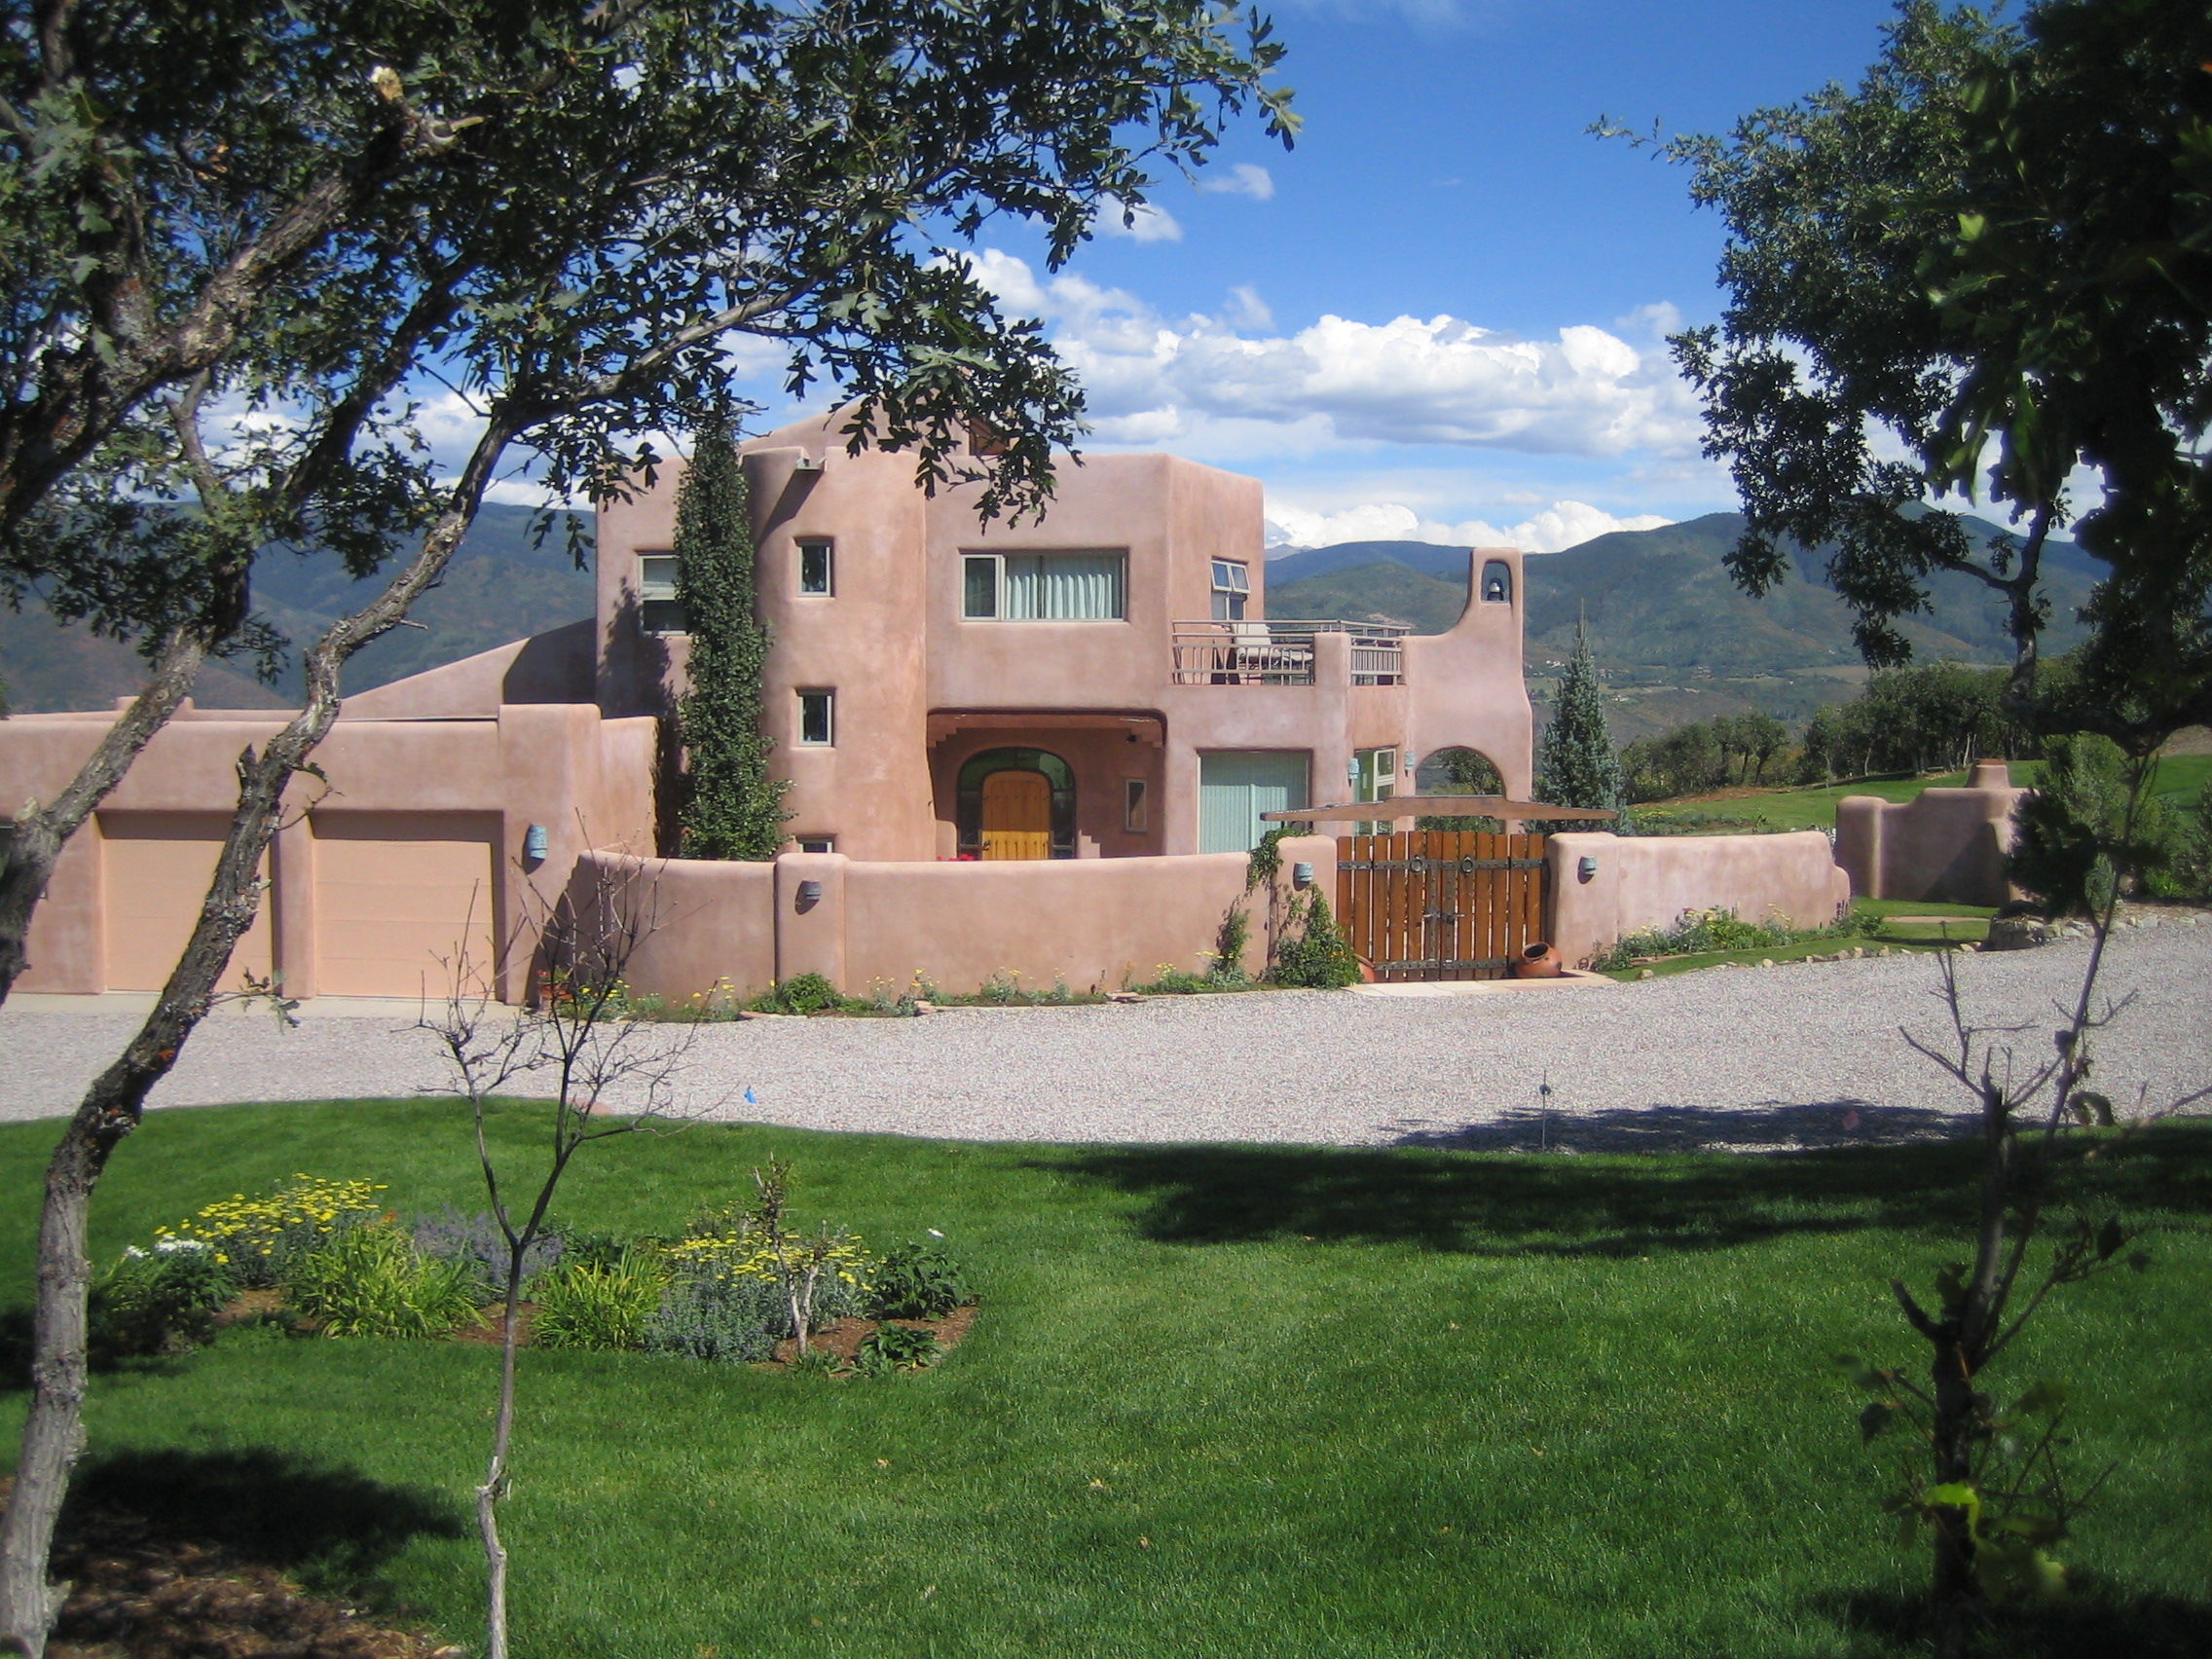 Villa Alta Vista -  Santa Fe style mountaintop property with fabulous views